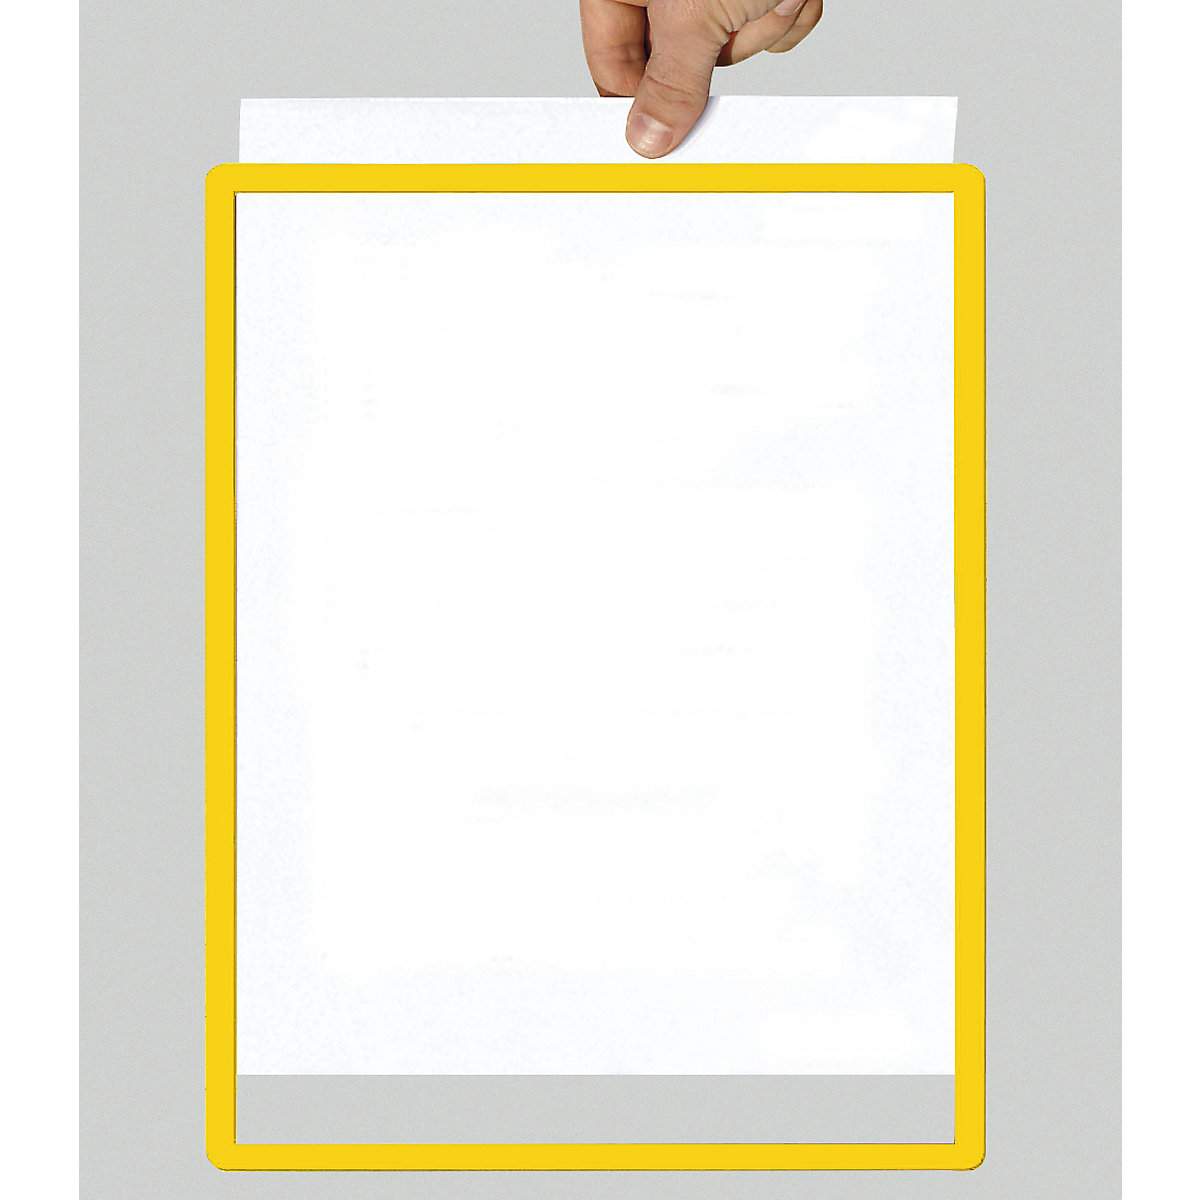 Cadre à film transparent, format documents A5, lot de 10, adhésif, jaune-8